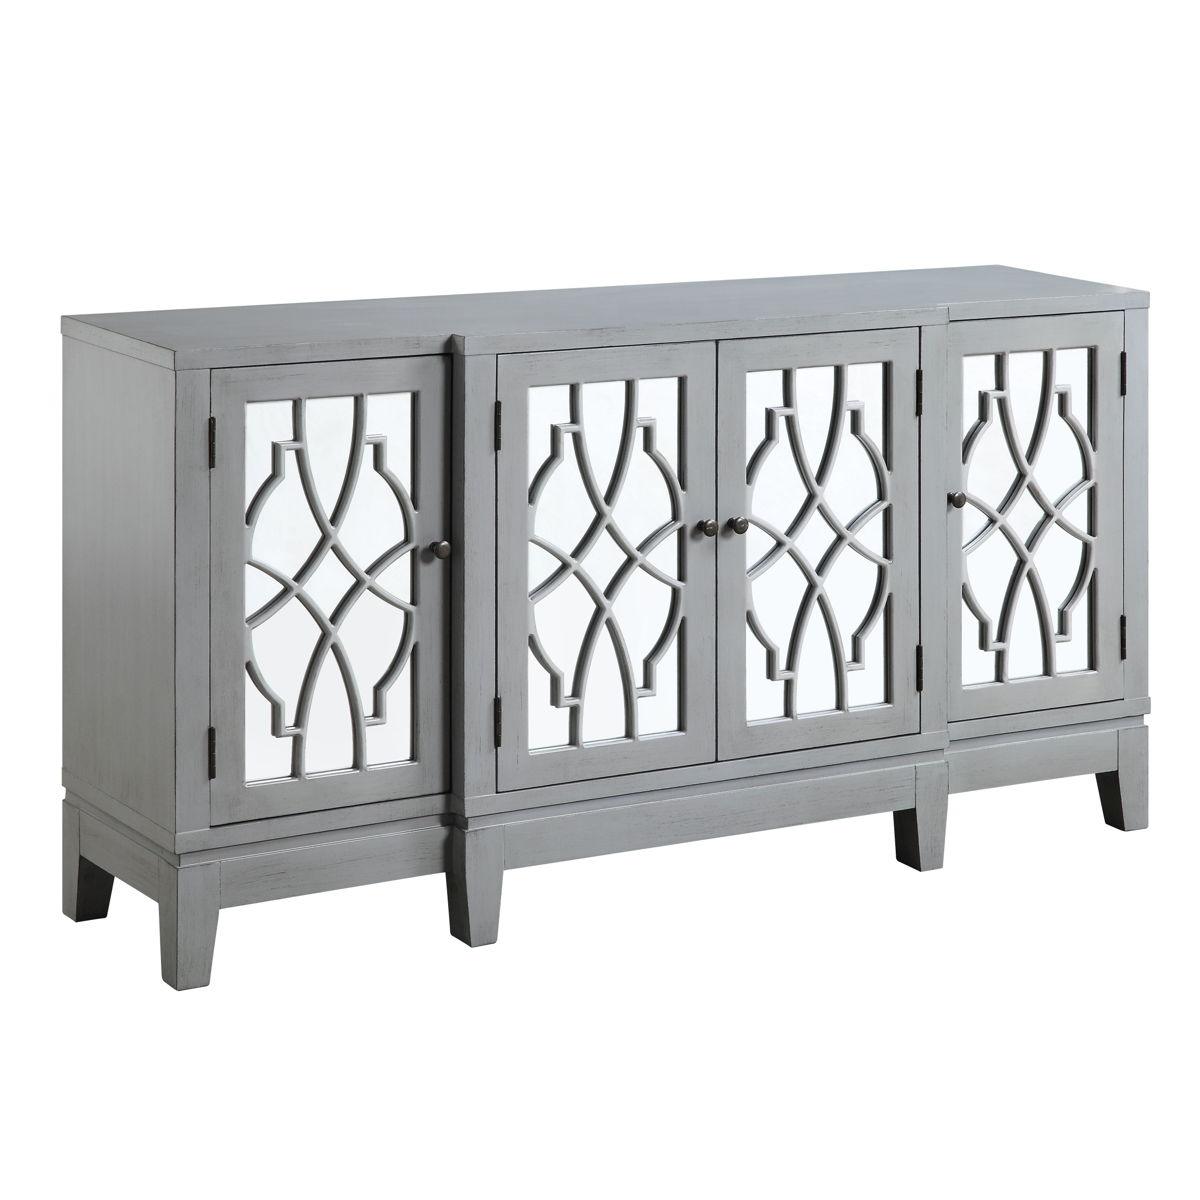 ACME - Magdi - Accent Table - Antique Gray Finish - 5th Avenue Furniture